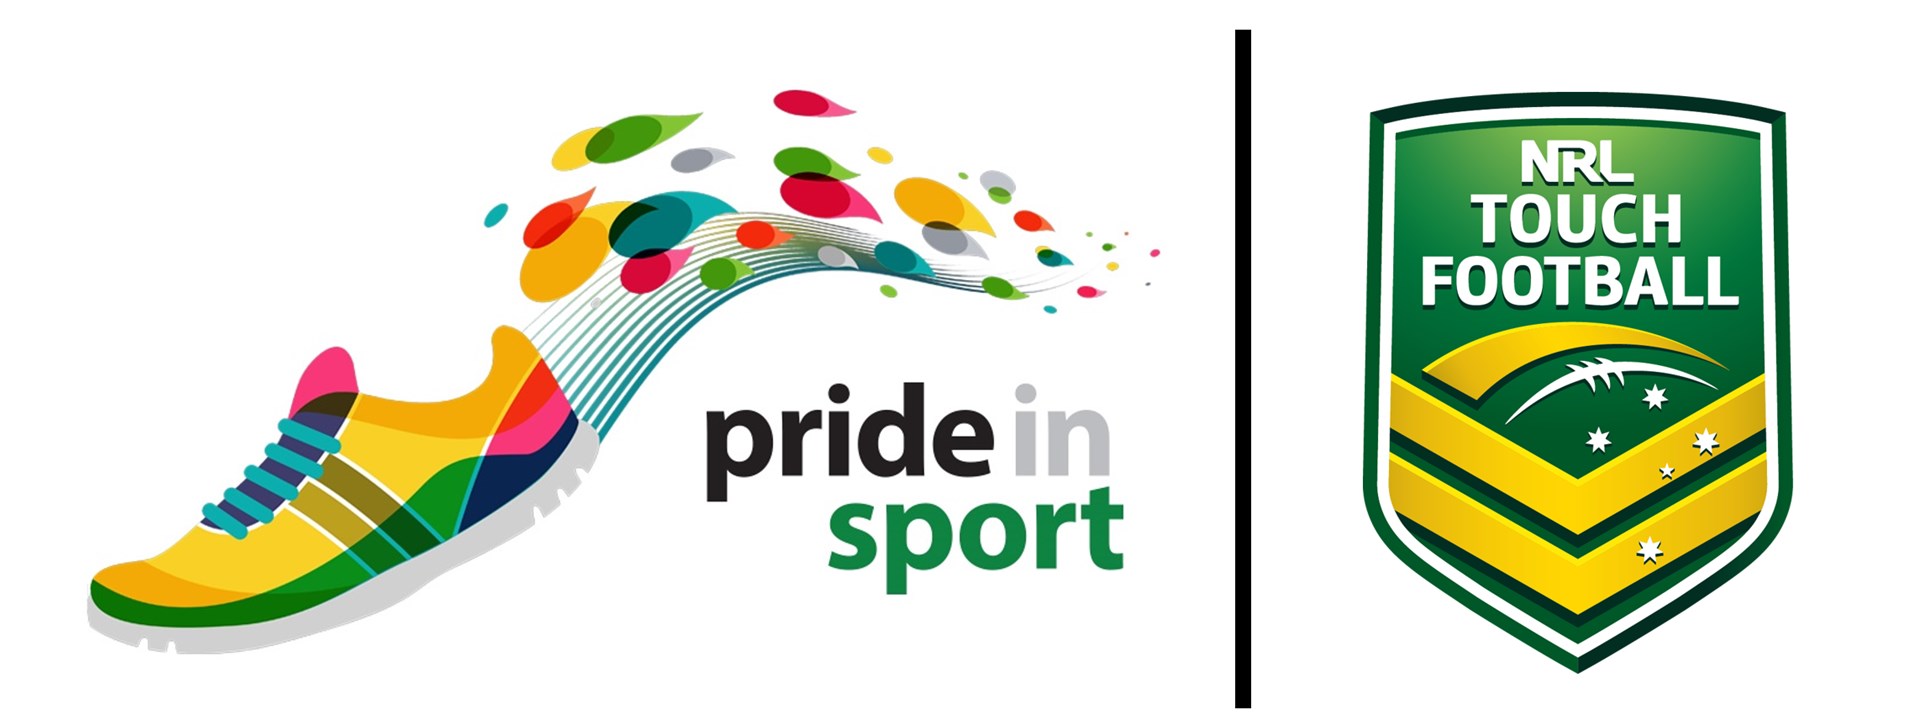 pride-in-sport-tfa_25325.png